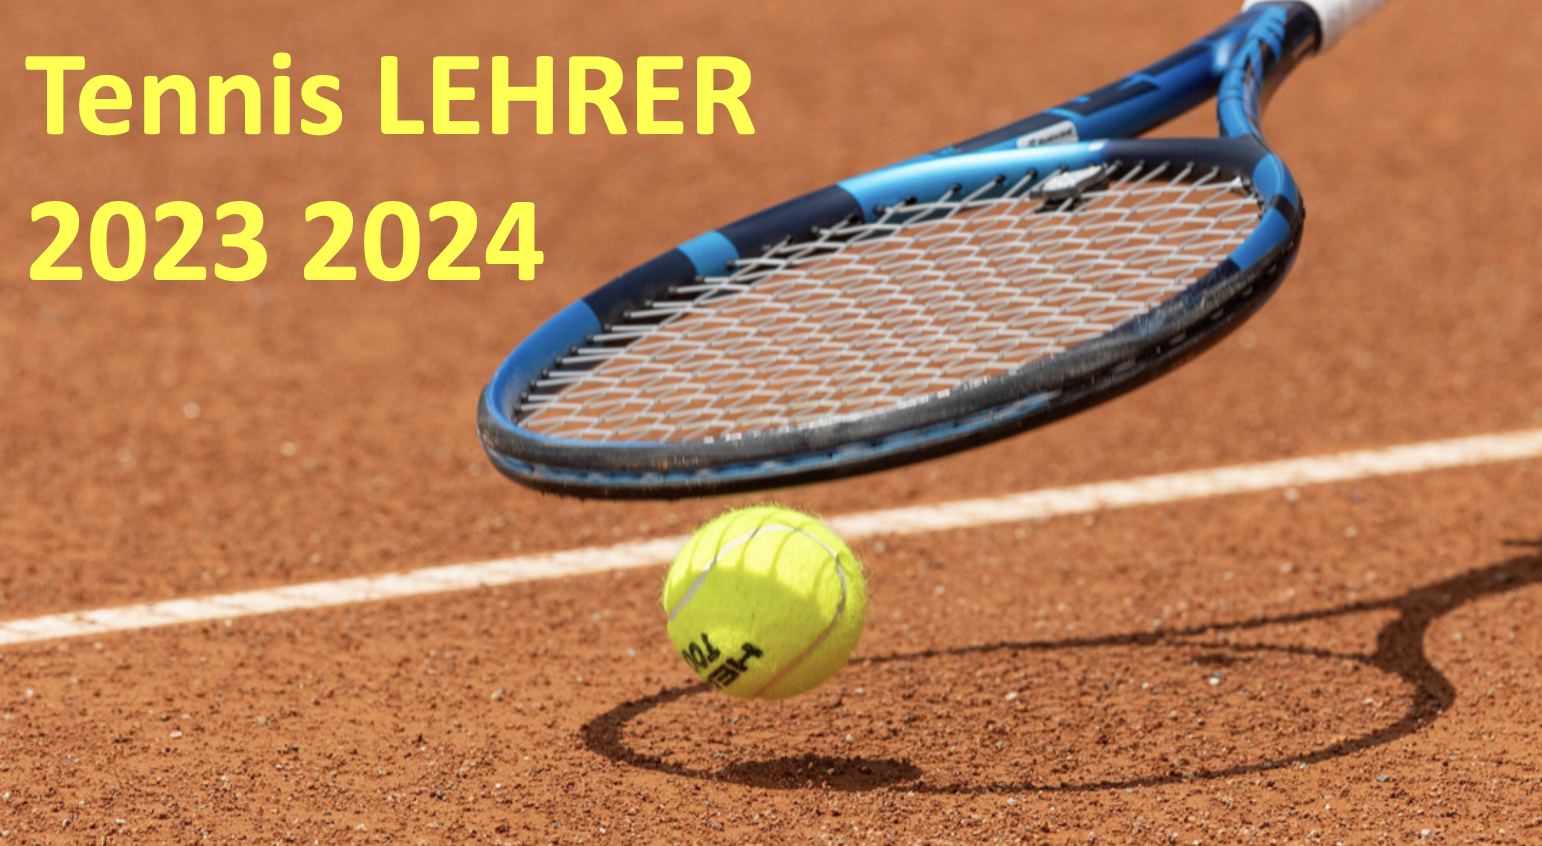 Tennis Lehrer 2023 2024